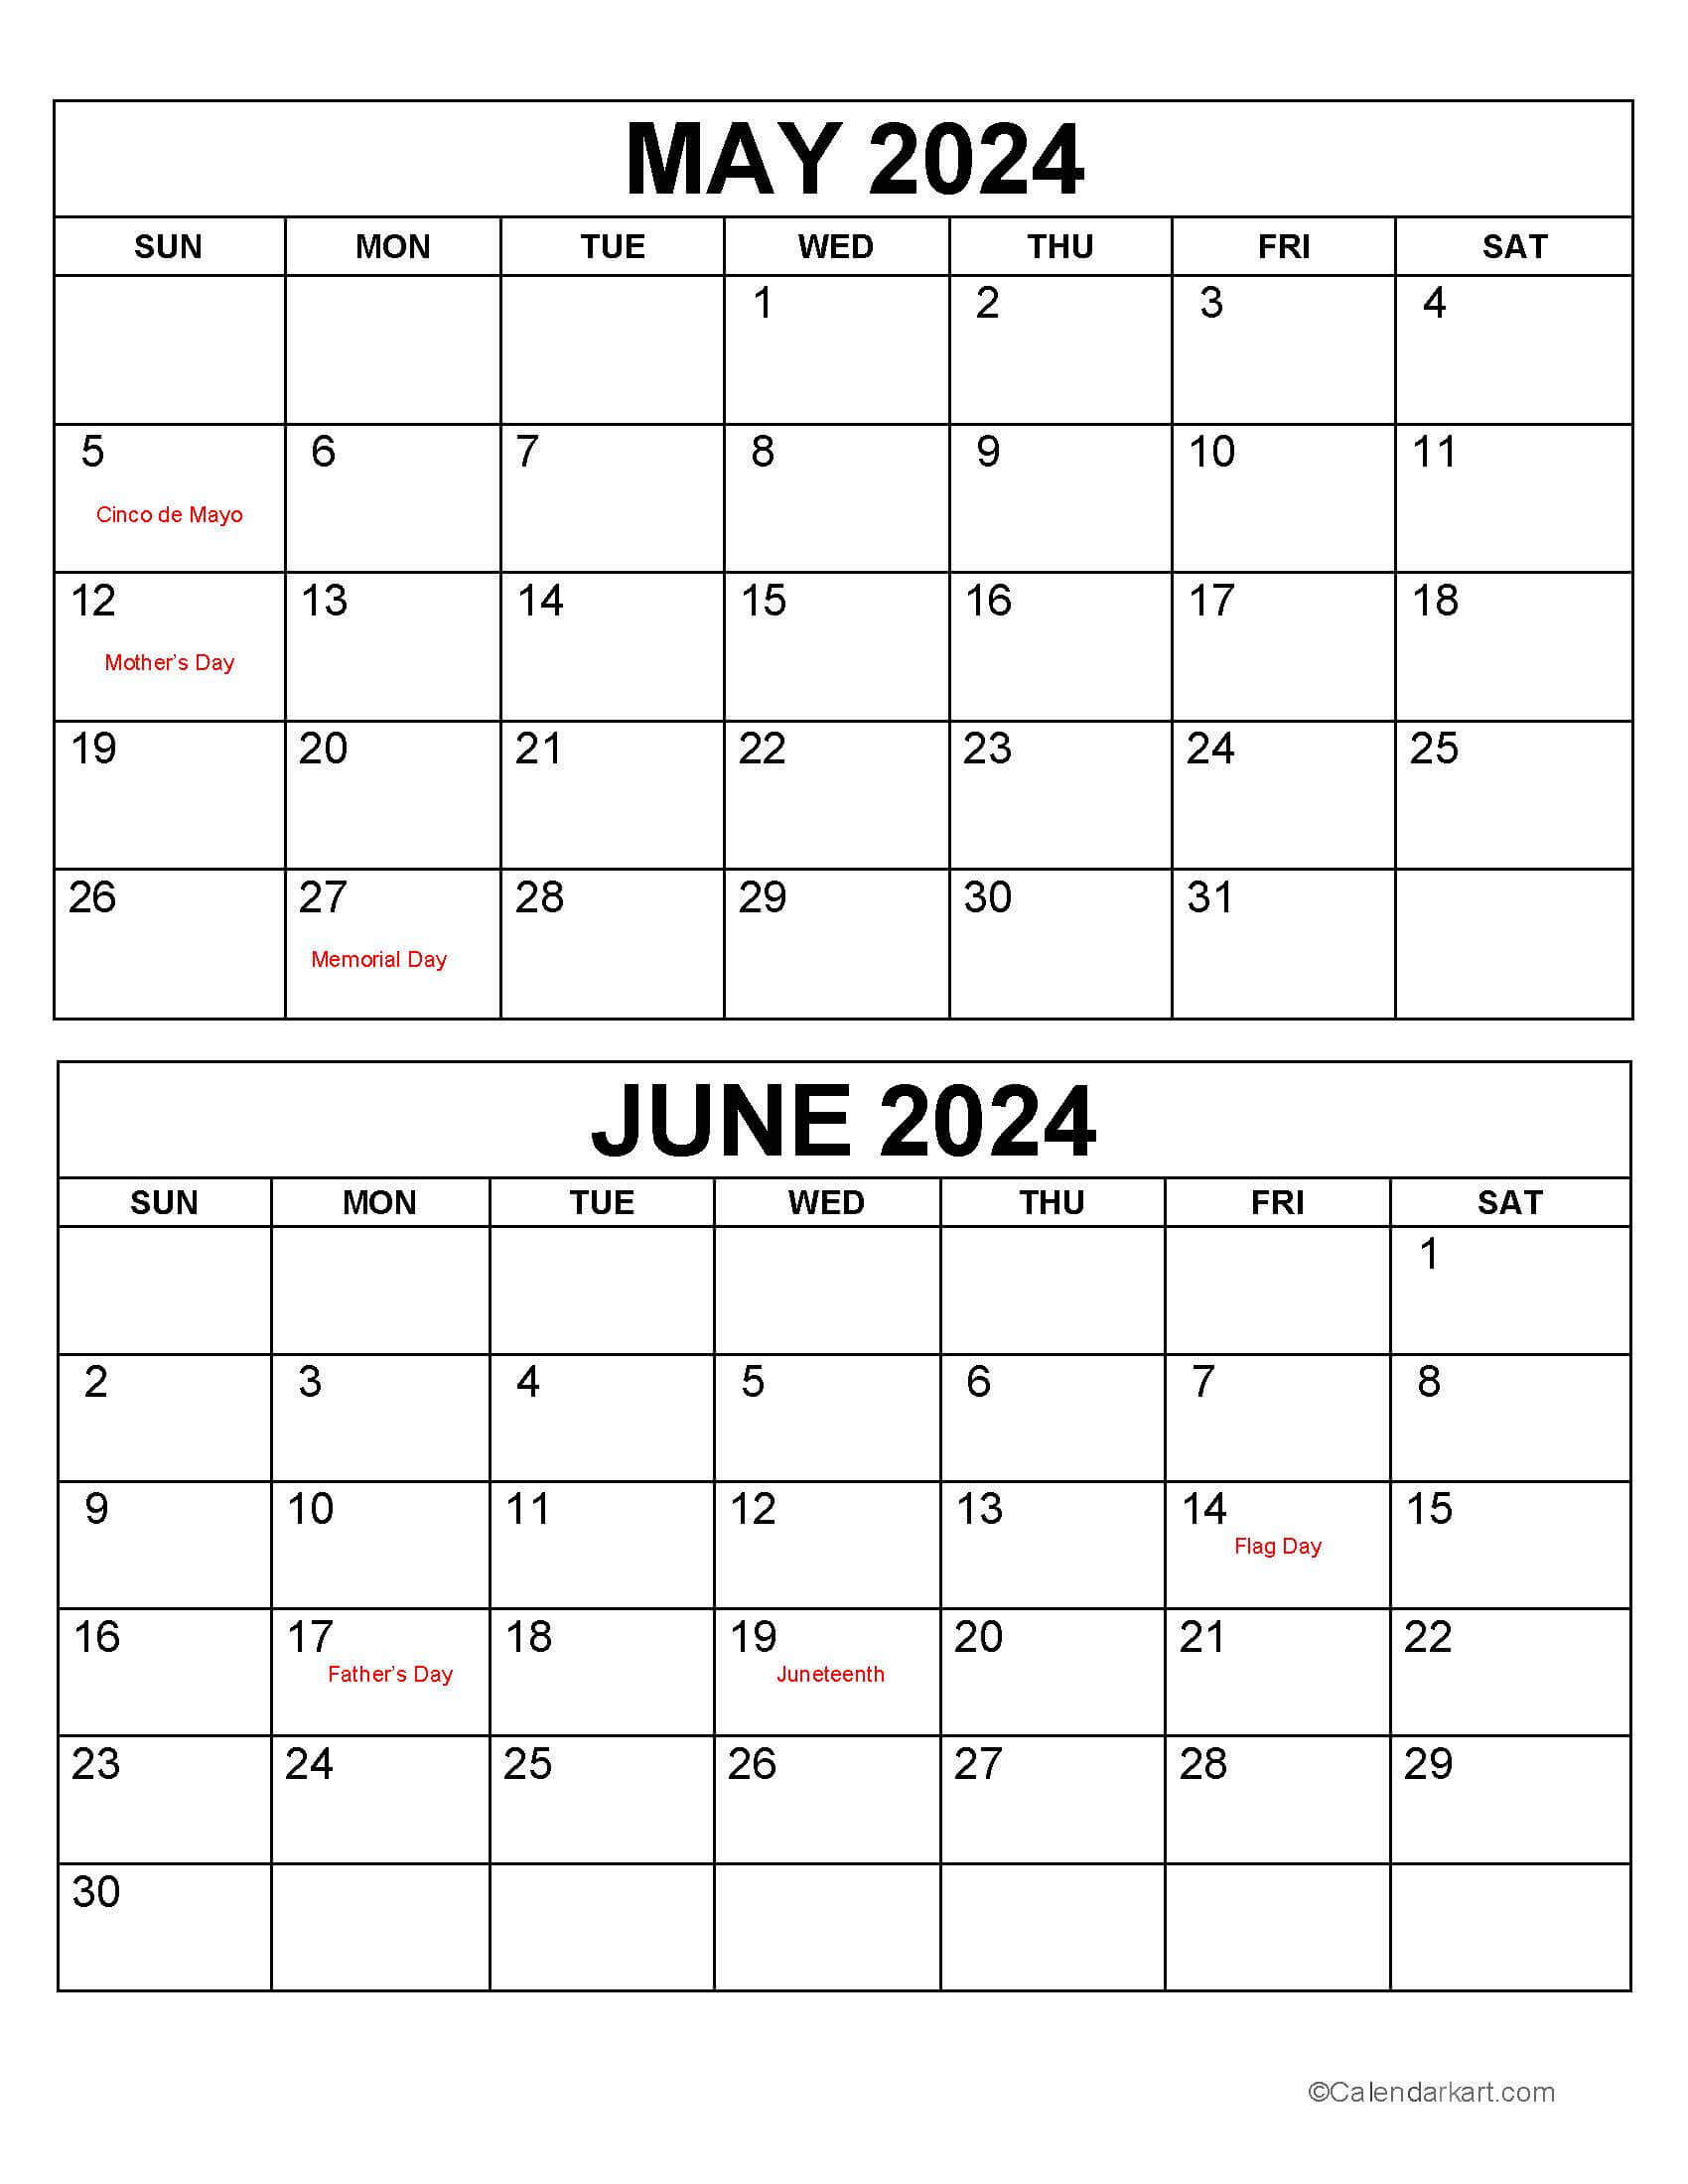 May June 2024 Calendars (3Rd Bi-Monthly) - Calendarkart pertaining to Calendar 2024 May June July